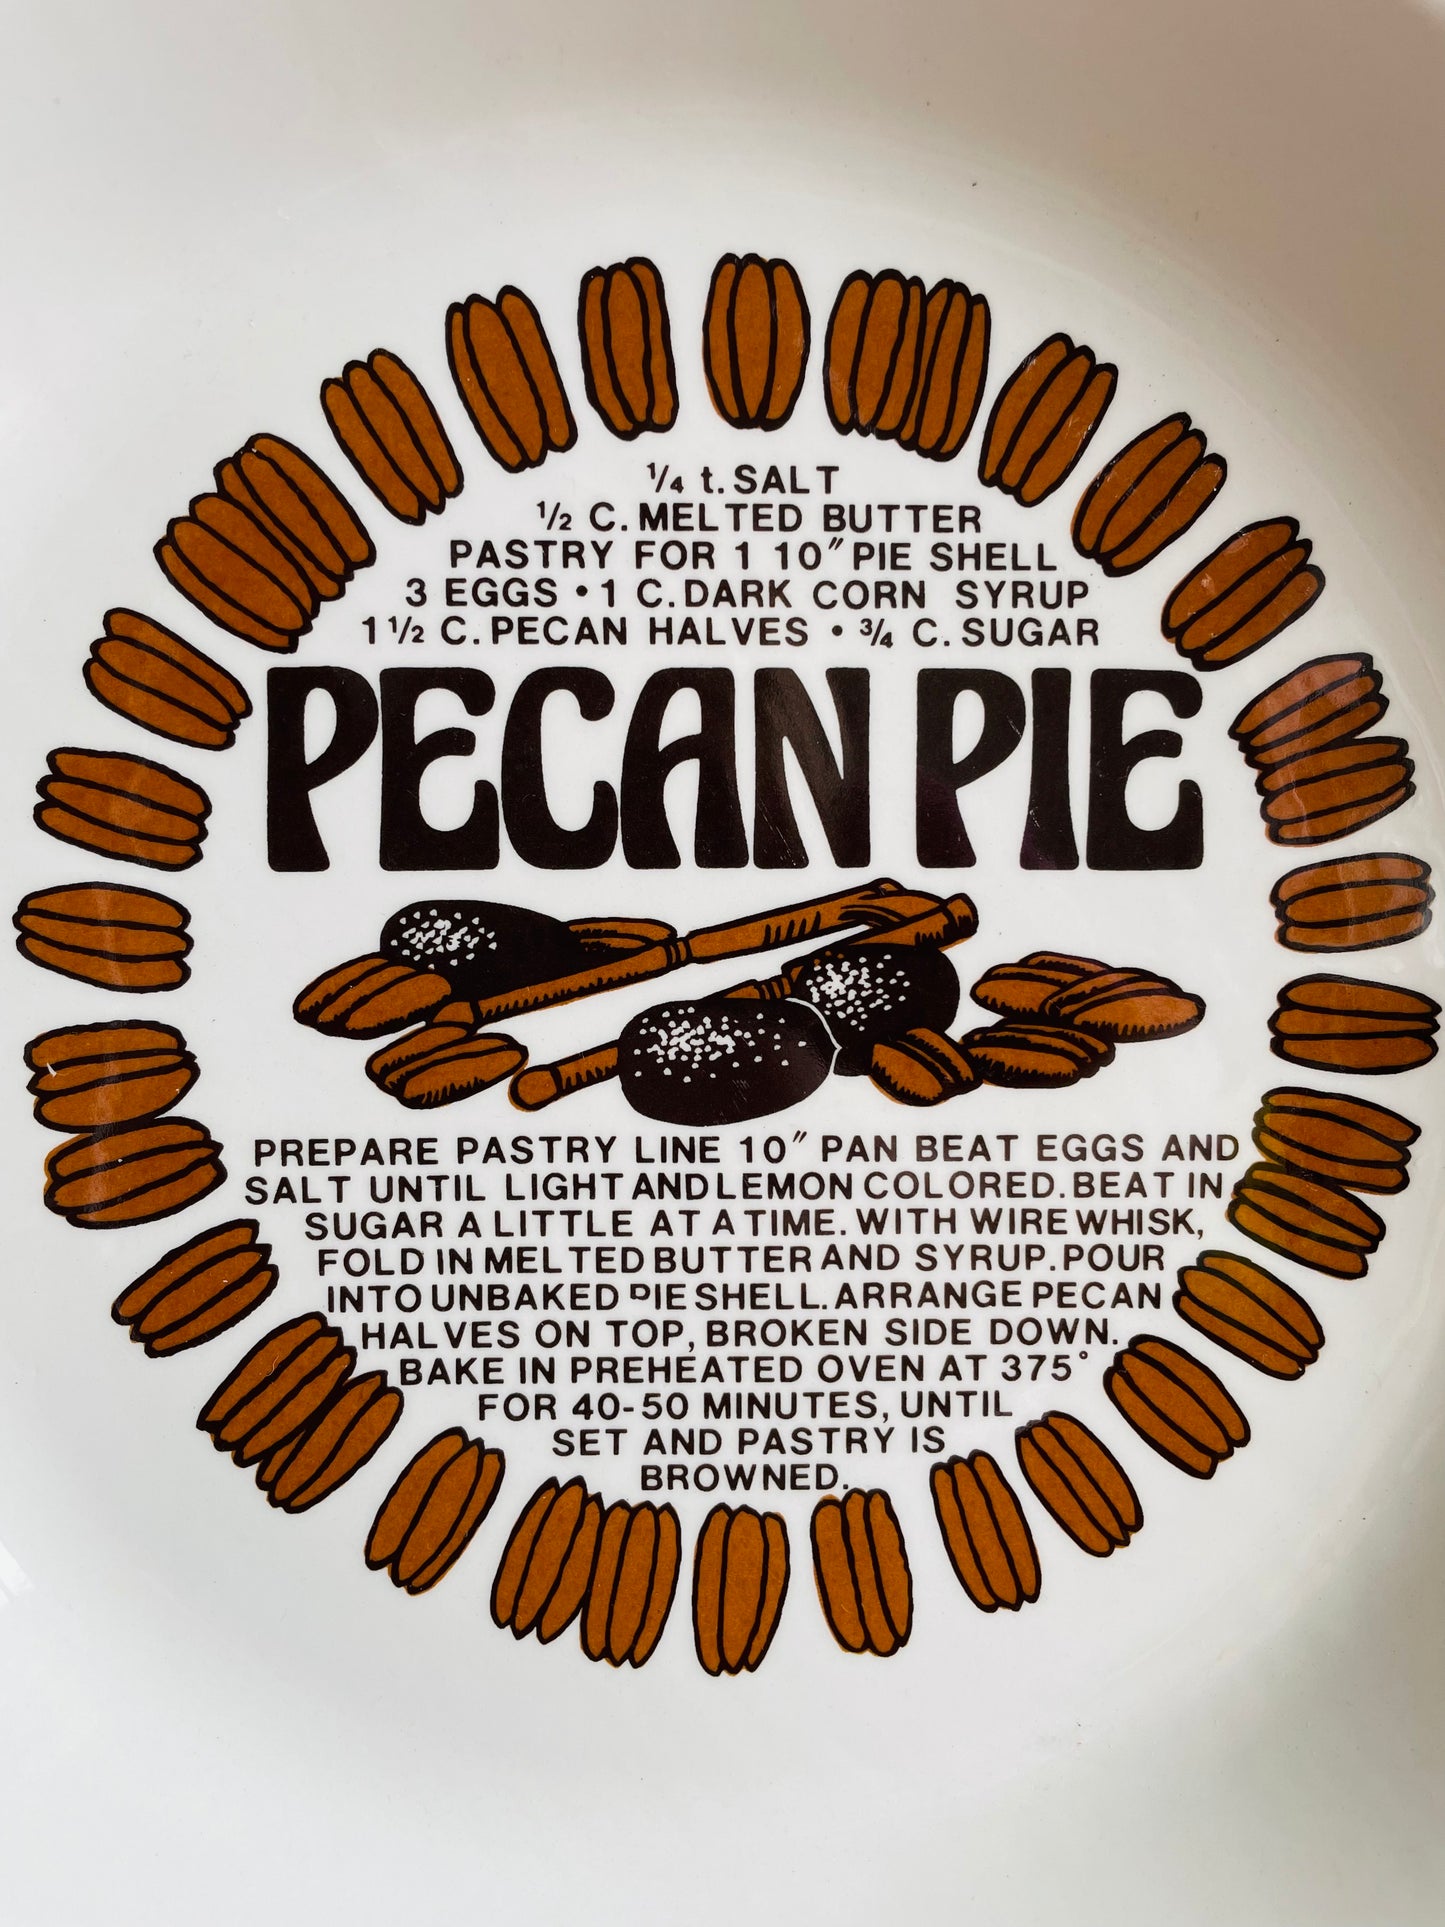 Pecan Pie Plate Dish with Recipe - Festival - Made in Korea